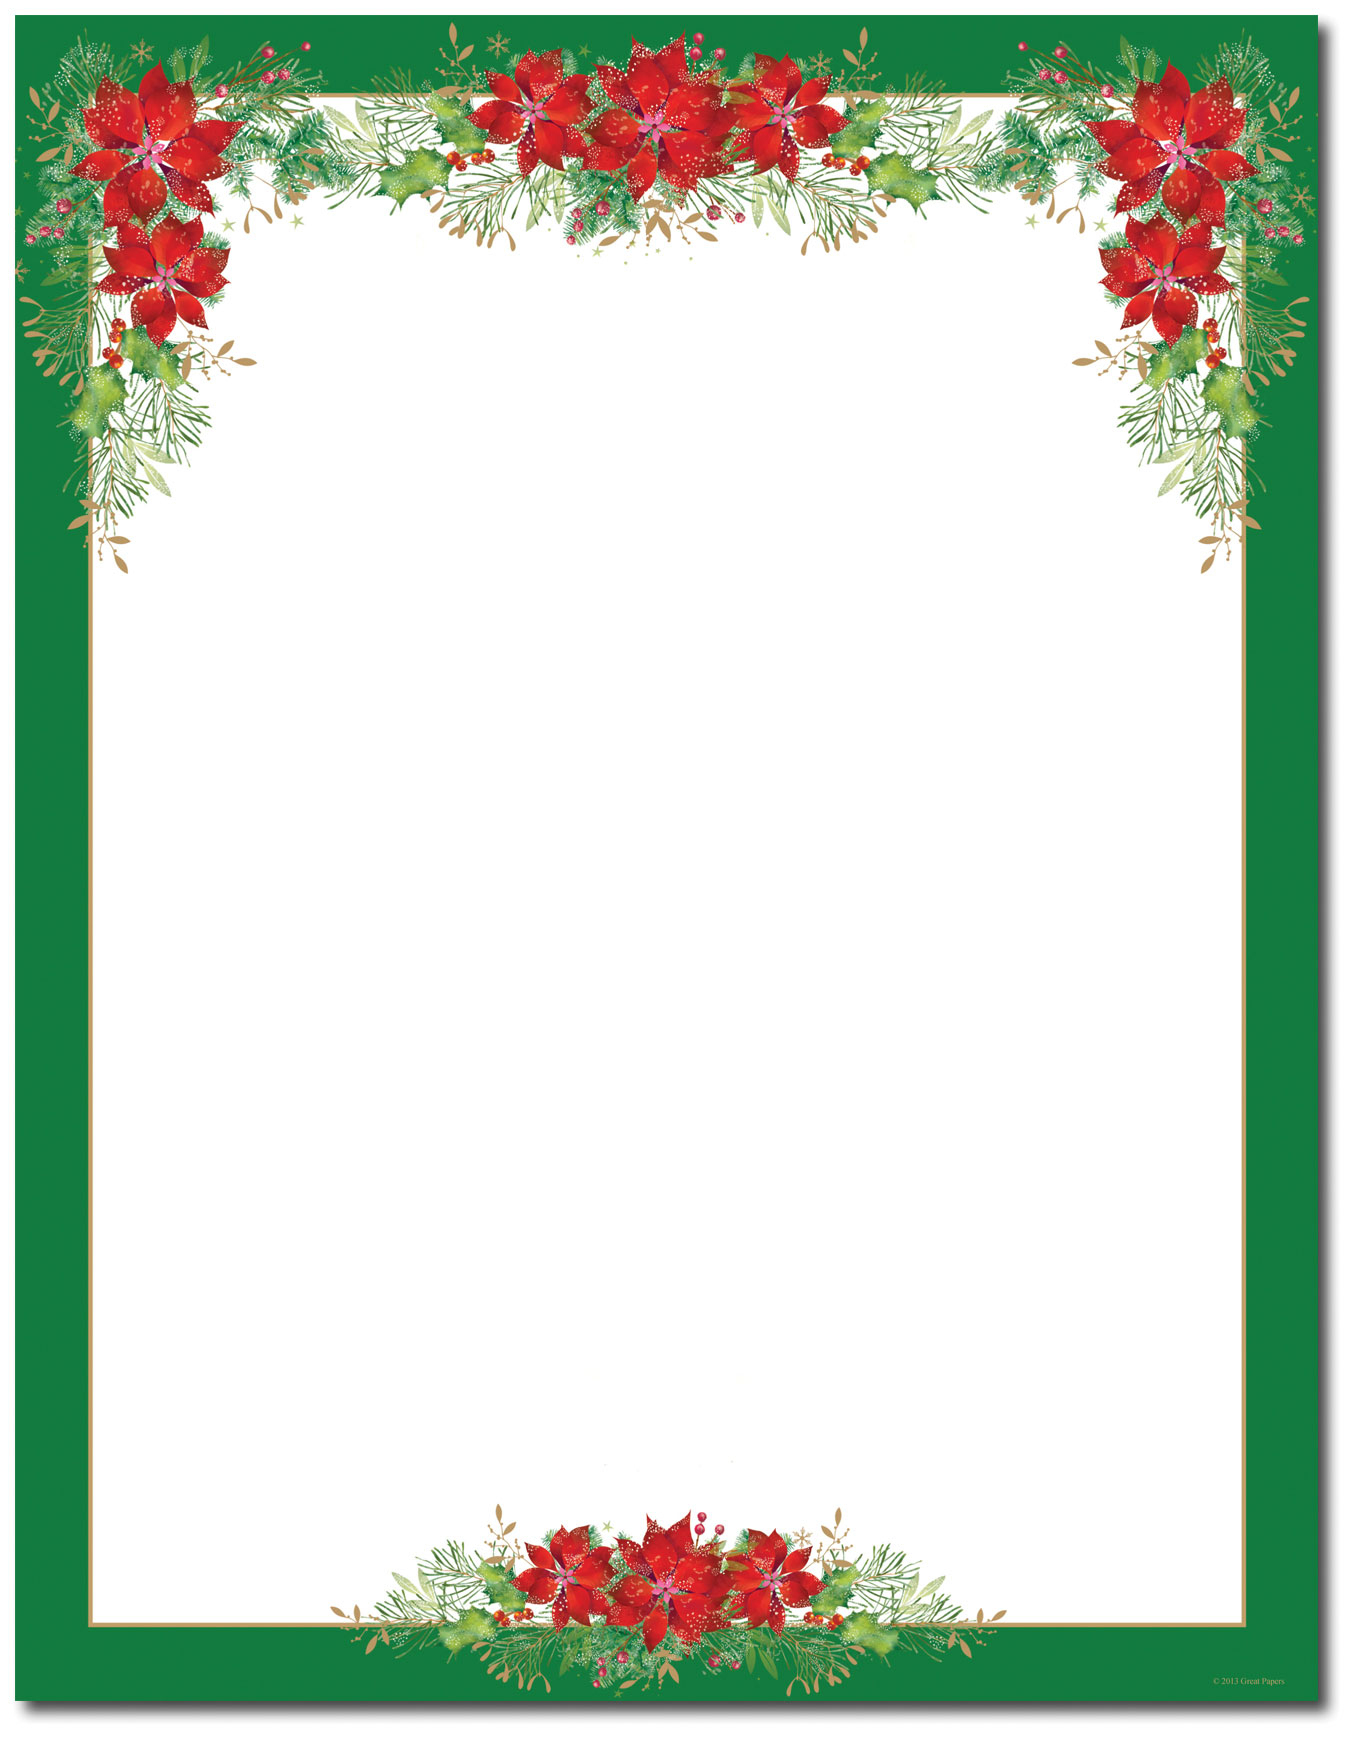 13 Free Printable Christmas Border Designs Images - Free Printable - Free Printable Christmas Paper With Borders